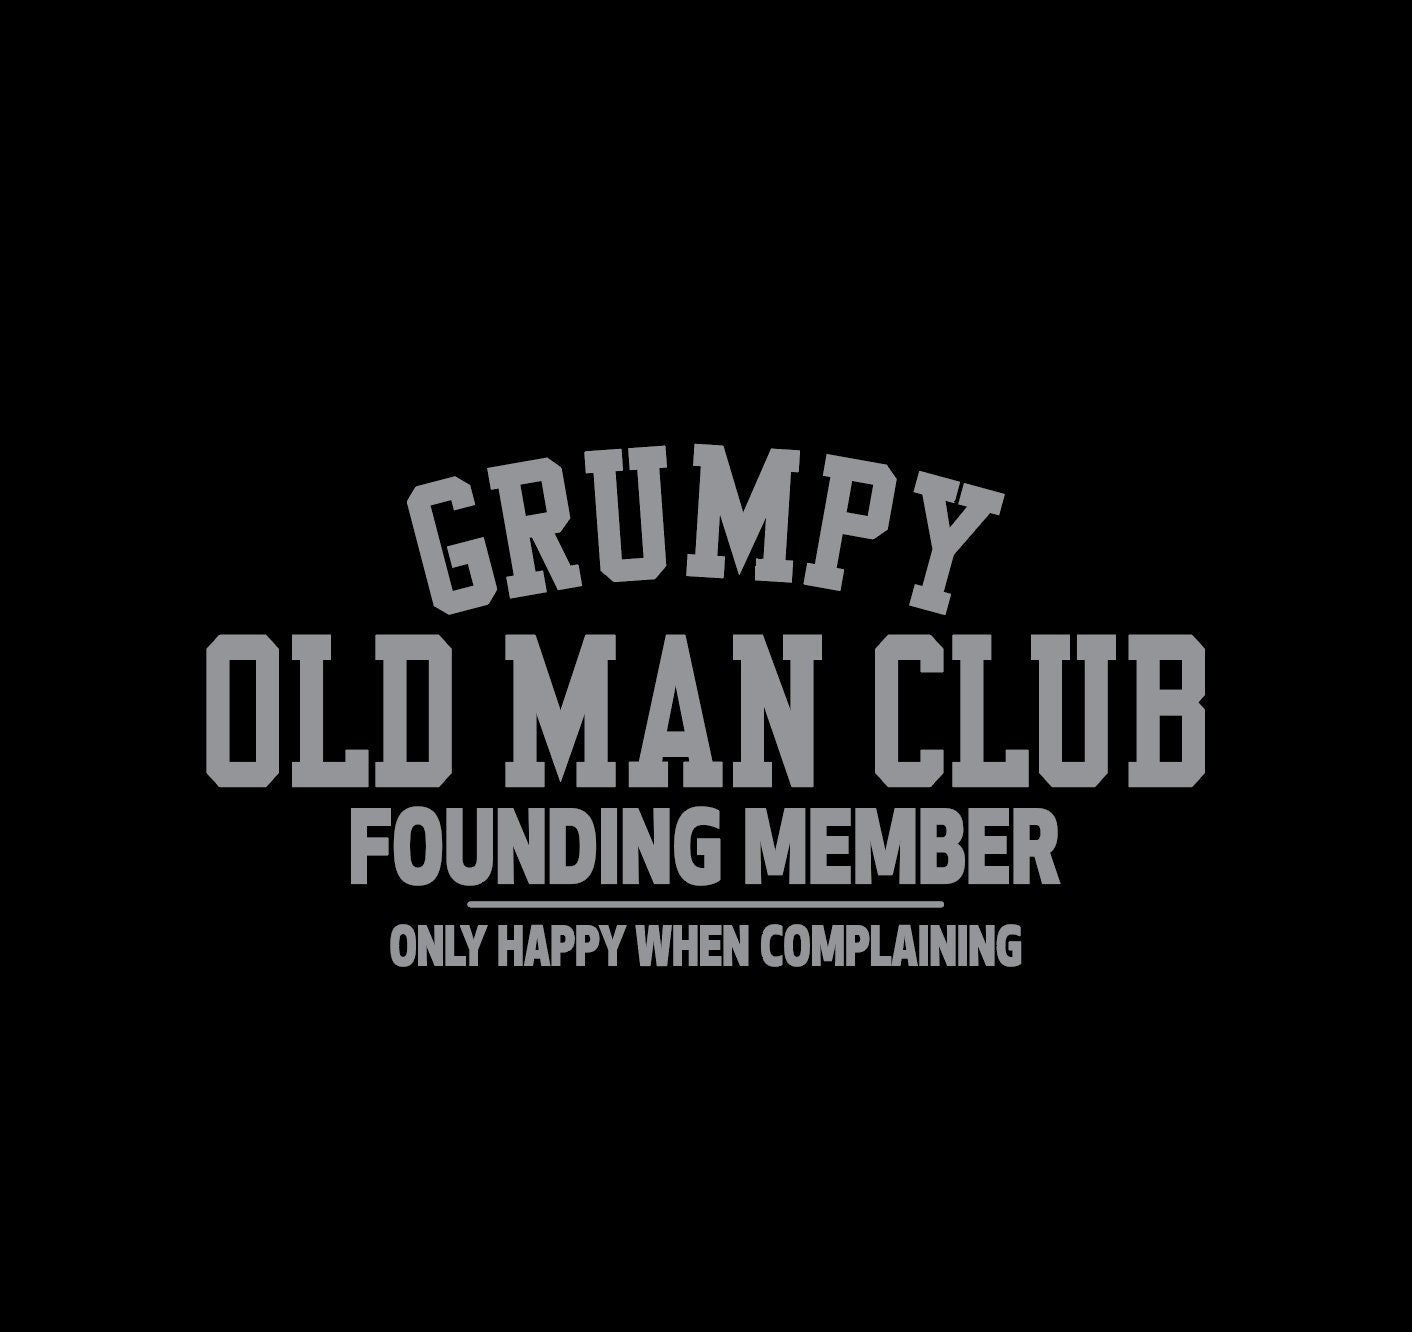 Grumpy Old Man Club Funny Stainless Steel Beer Bottle Opener Small